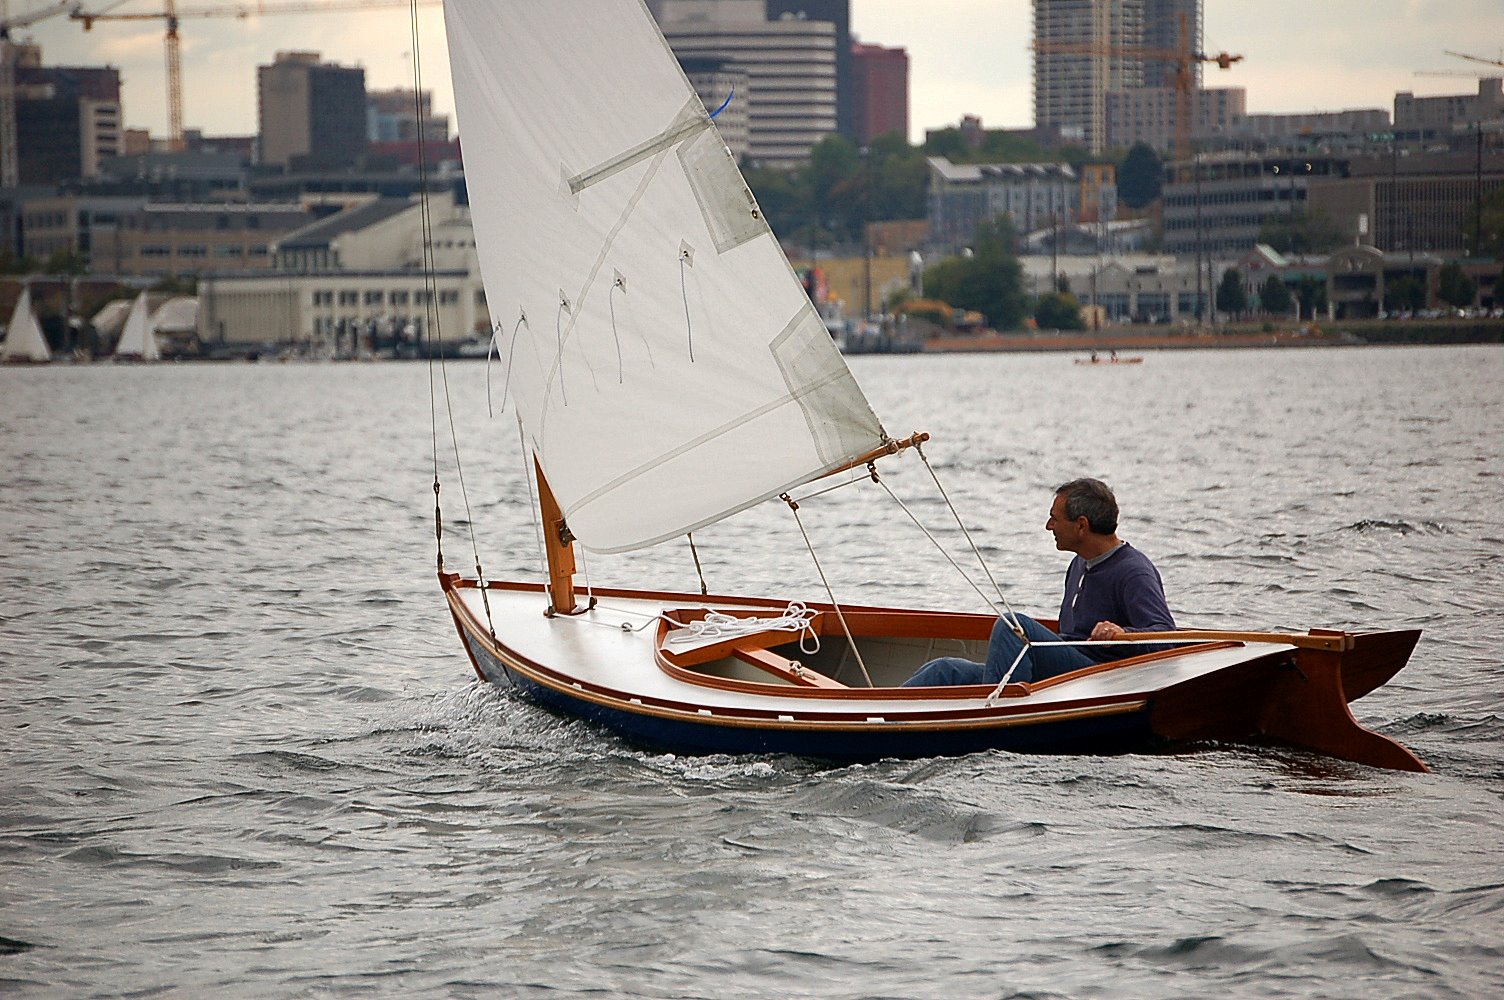 A man sails a sailboat on a lake.